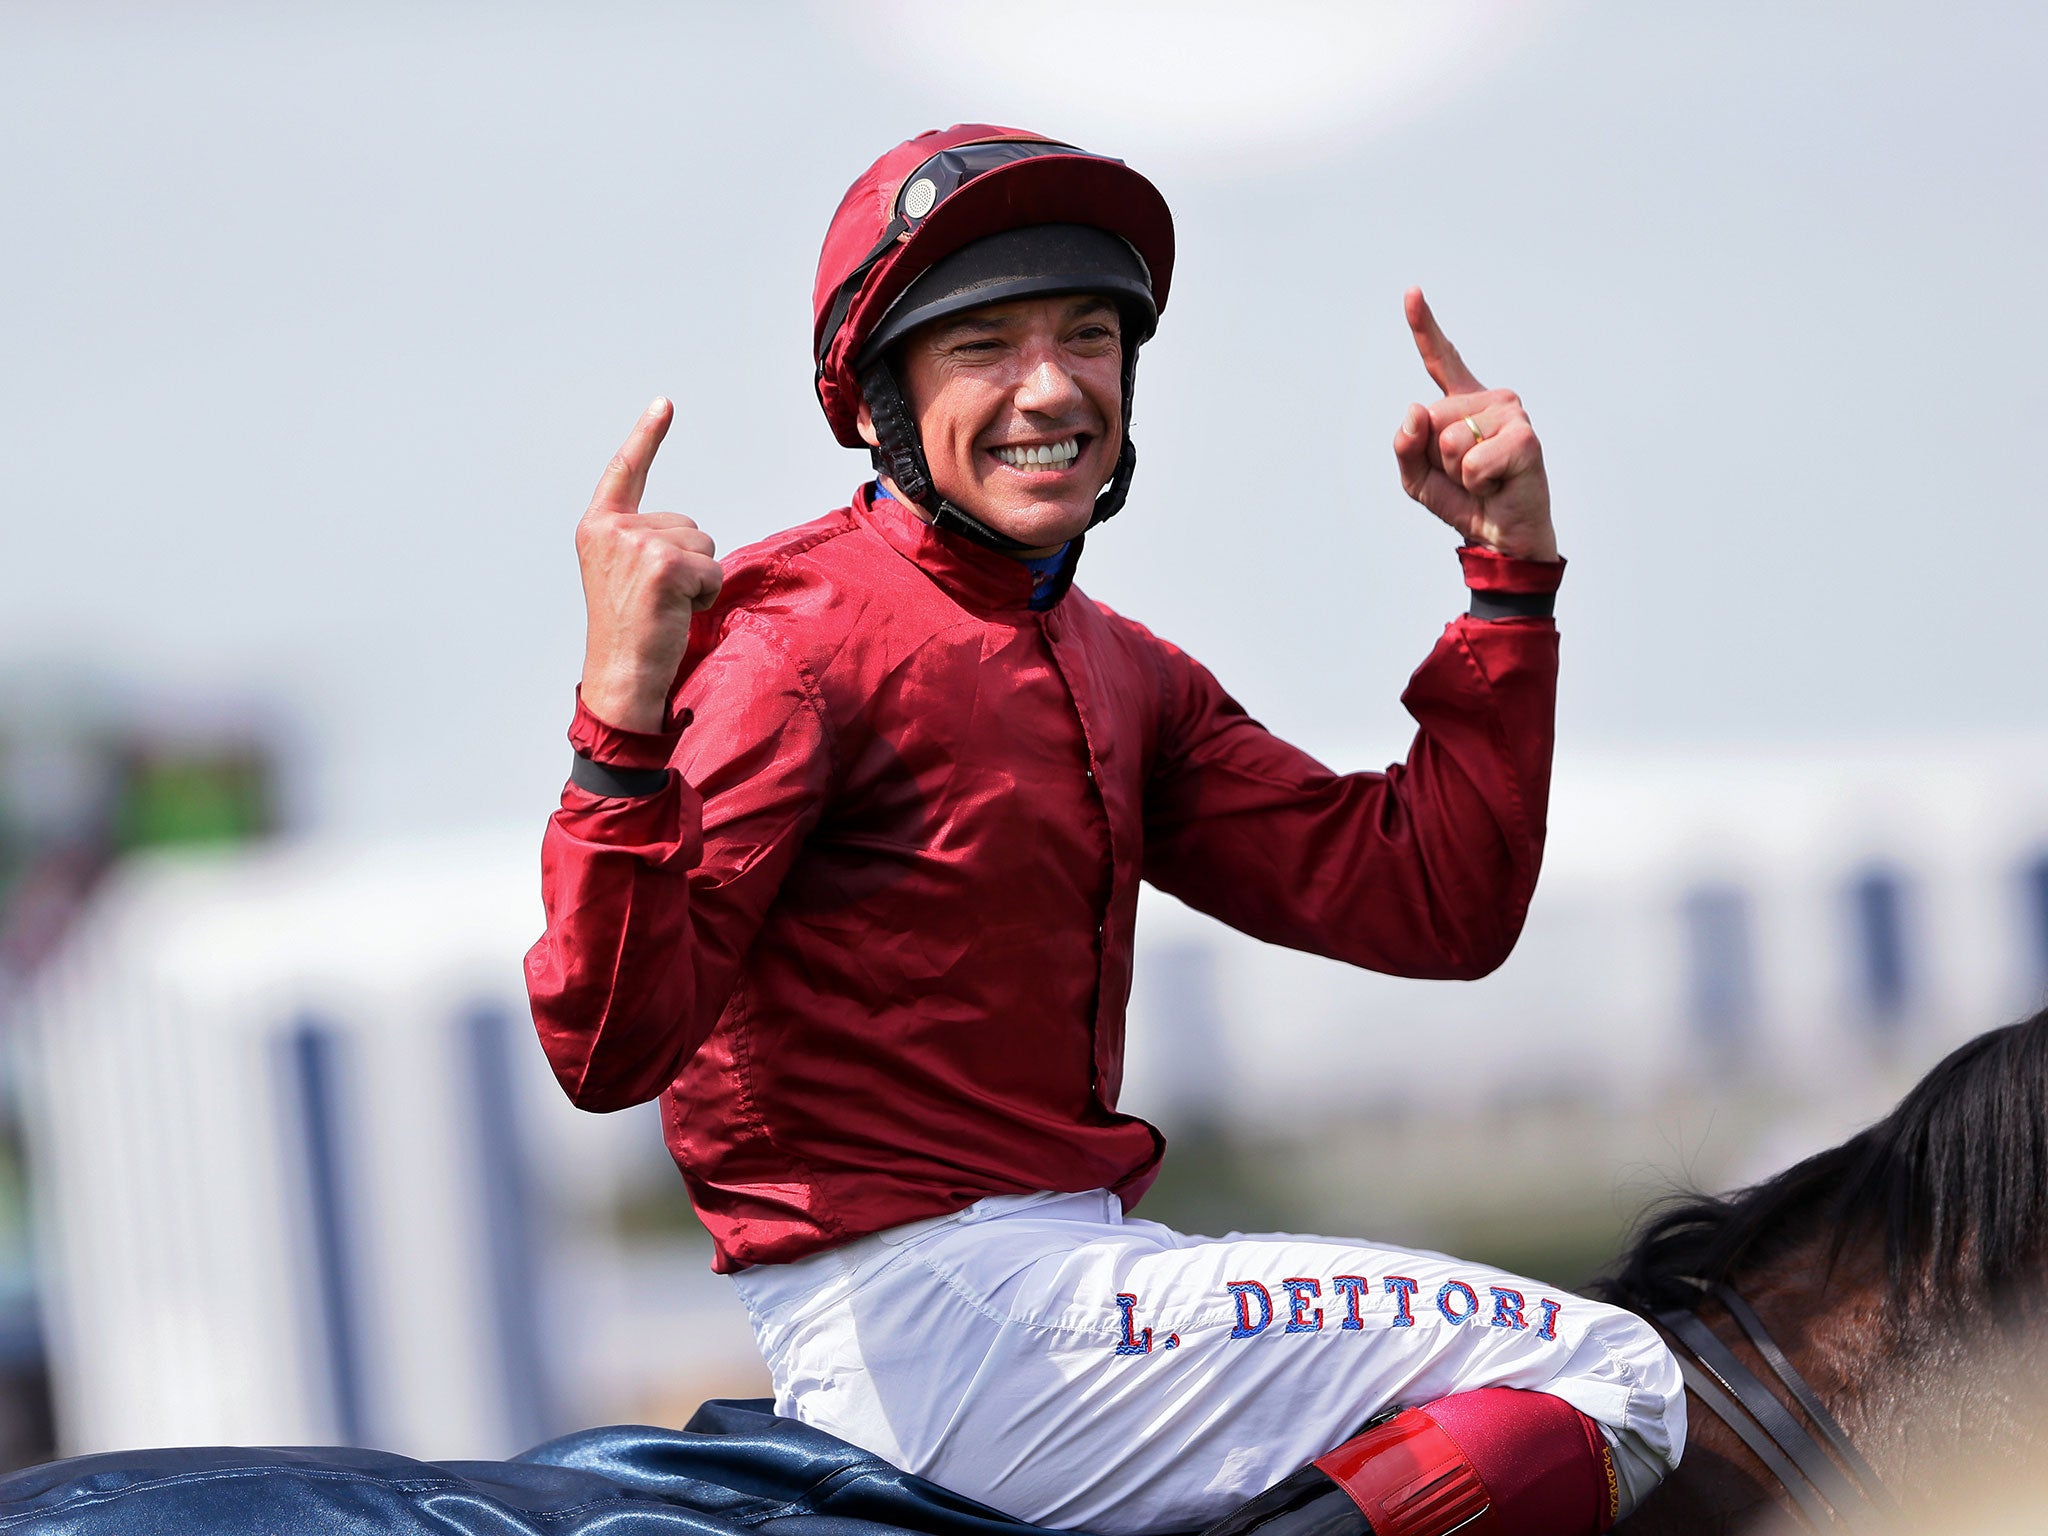 Frankie Dettori on Star of Seville celebrates after he won the Prix de Diane horse race